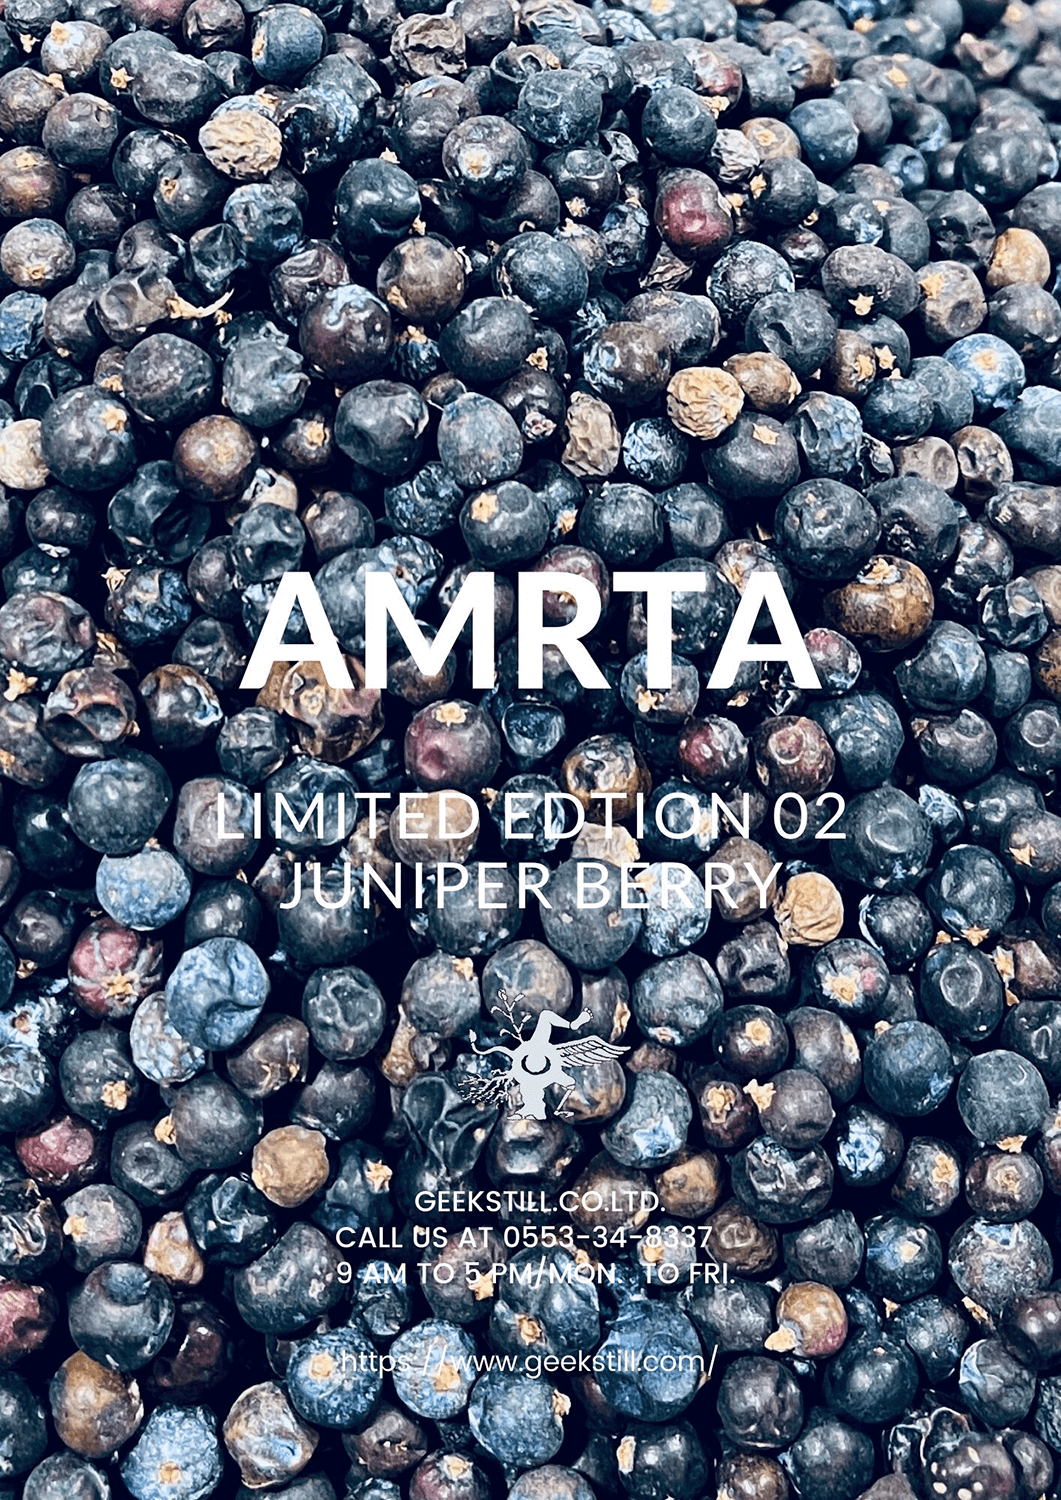 amrta-gin-limited-edition-01_03